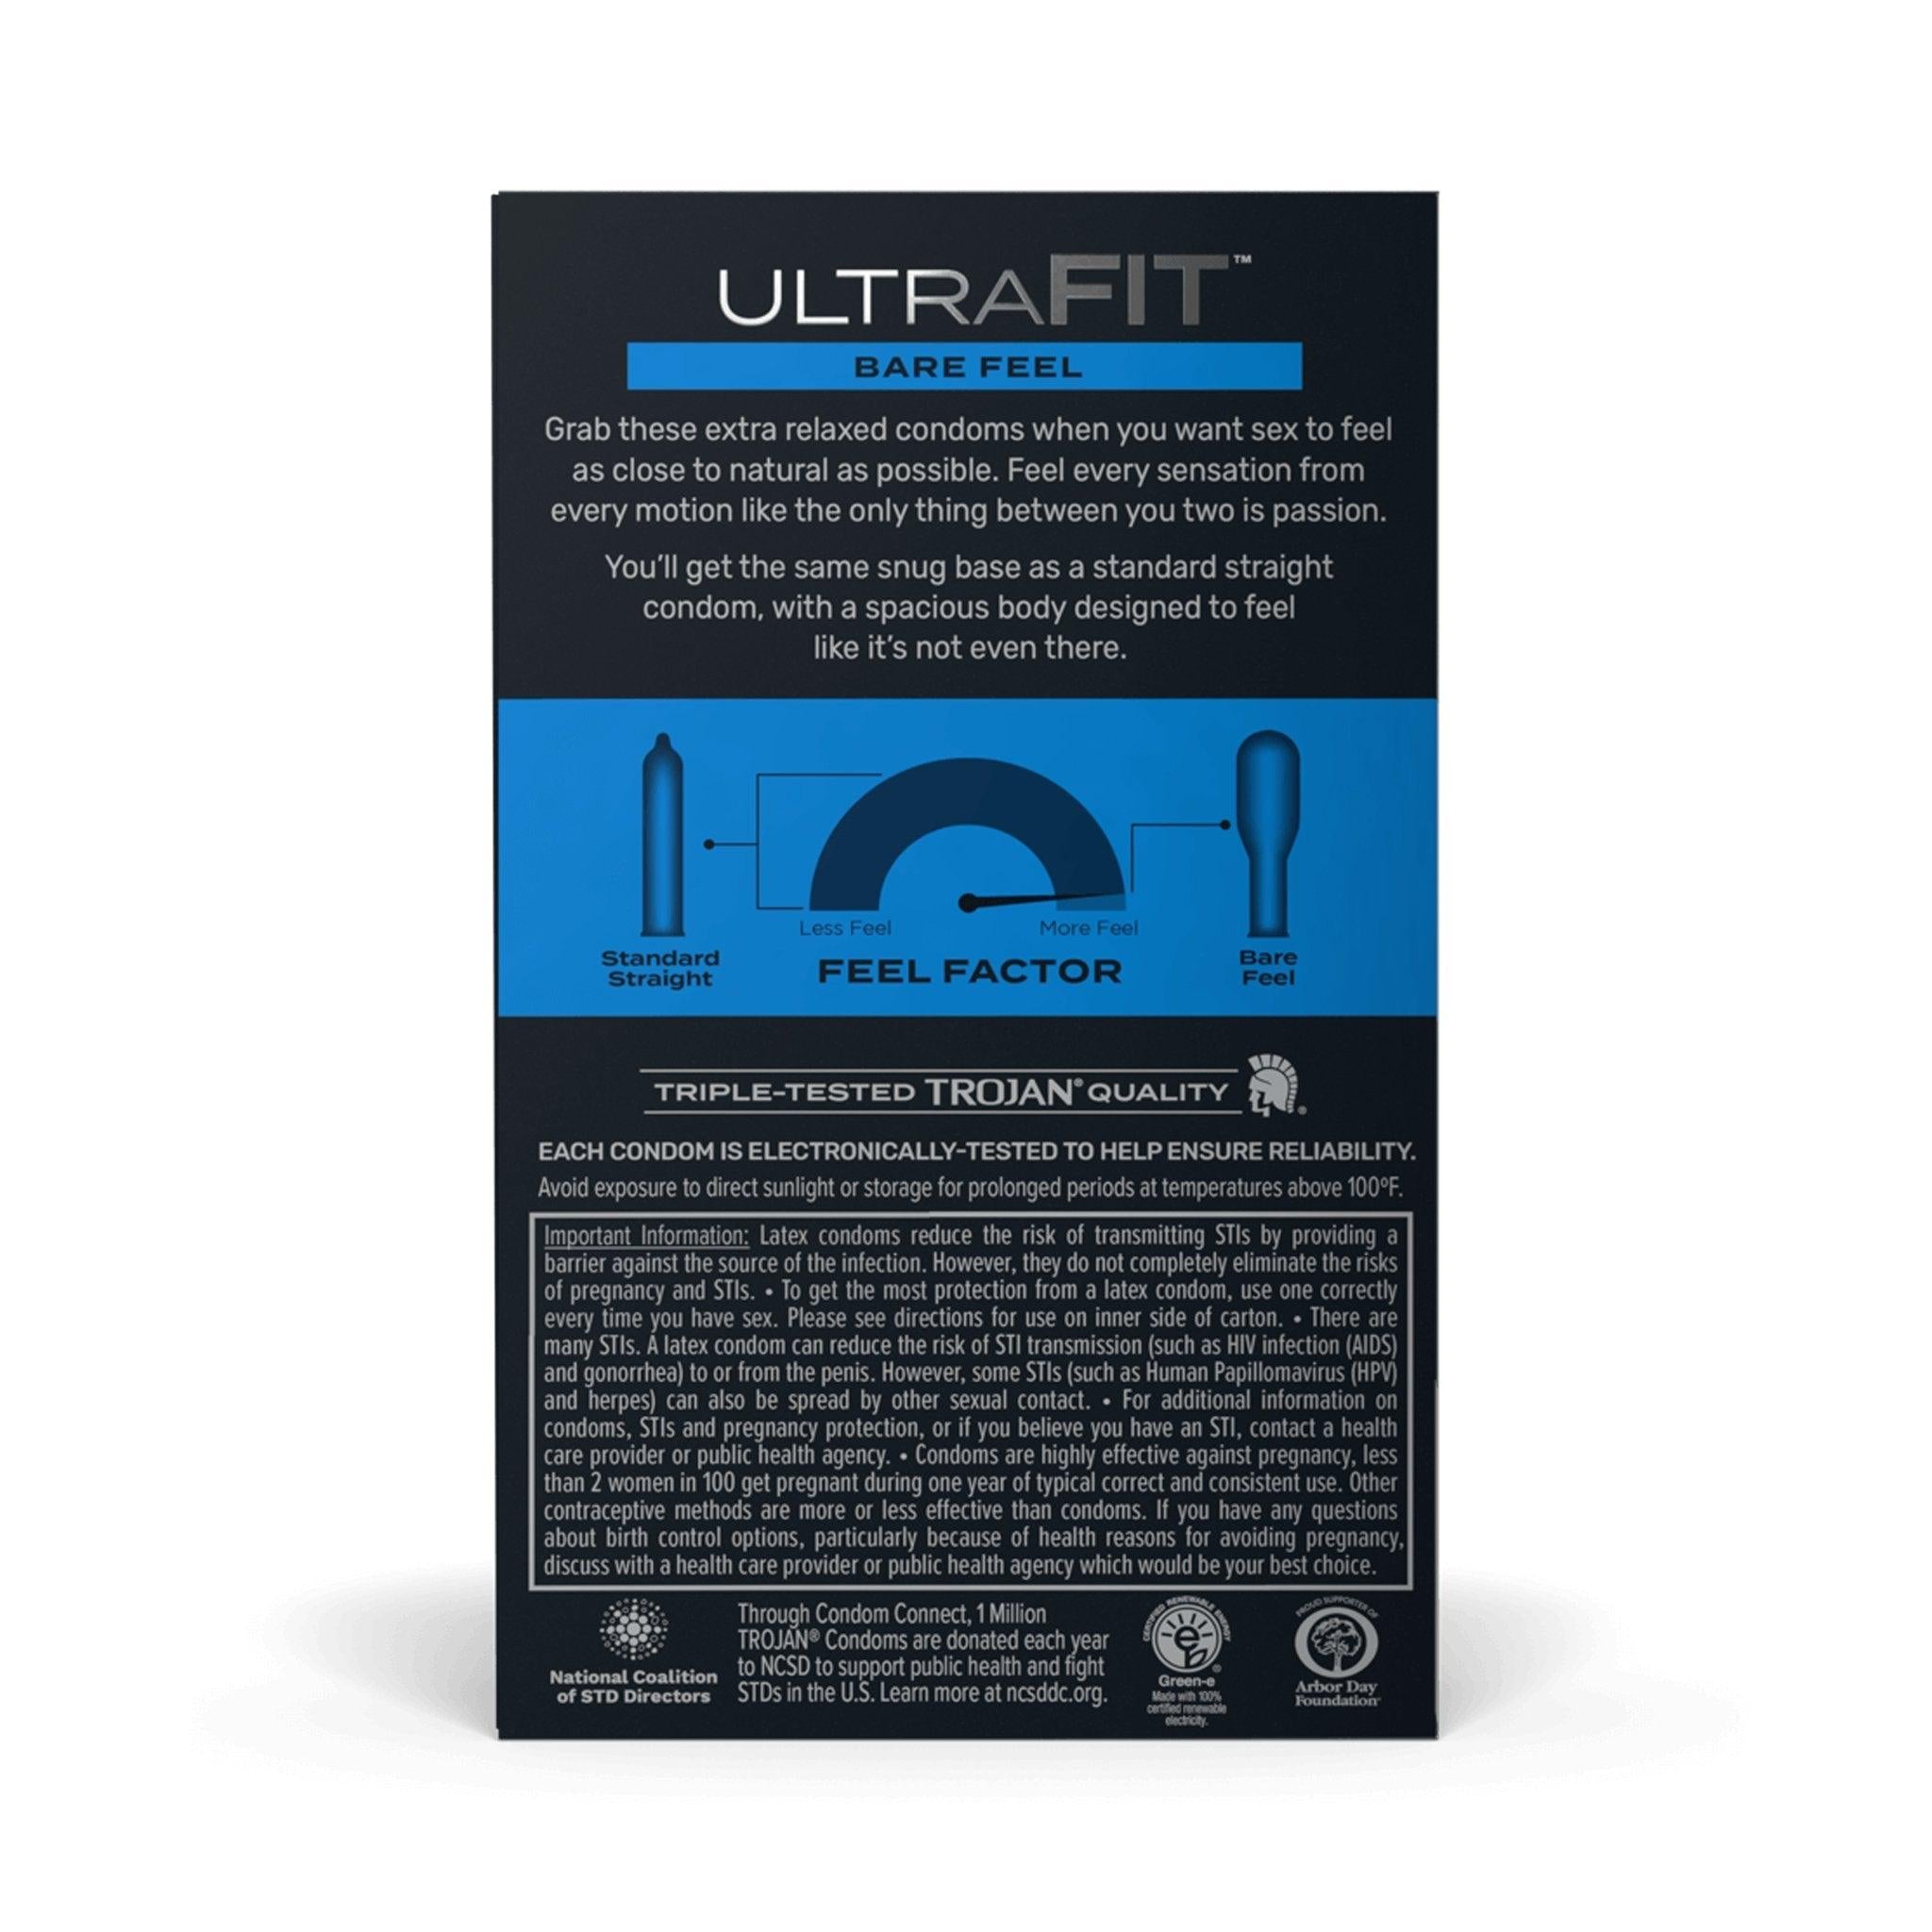 Trojan Brand Ultra FIT Bare Feel condoms 10pk - CheapLubes.com